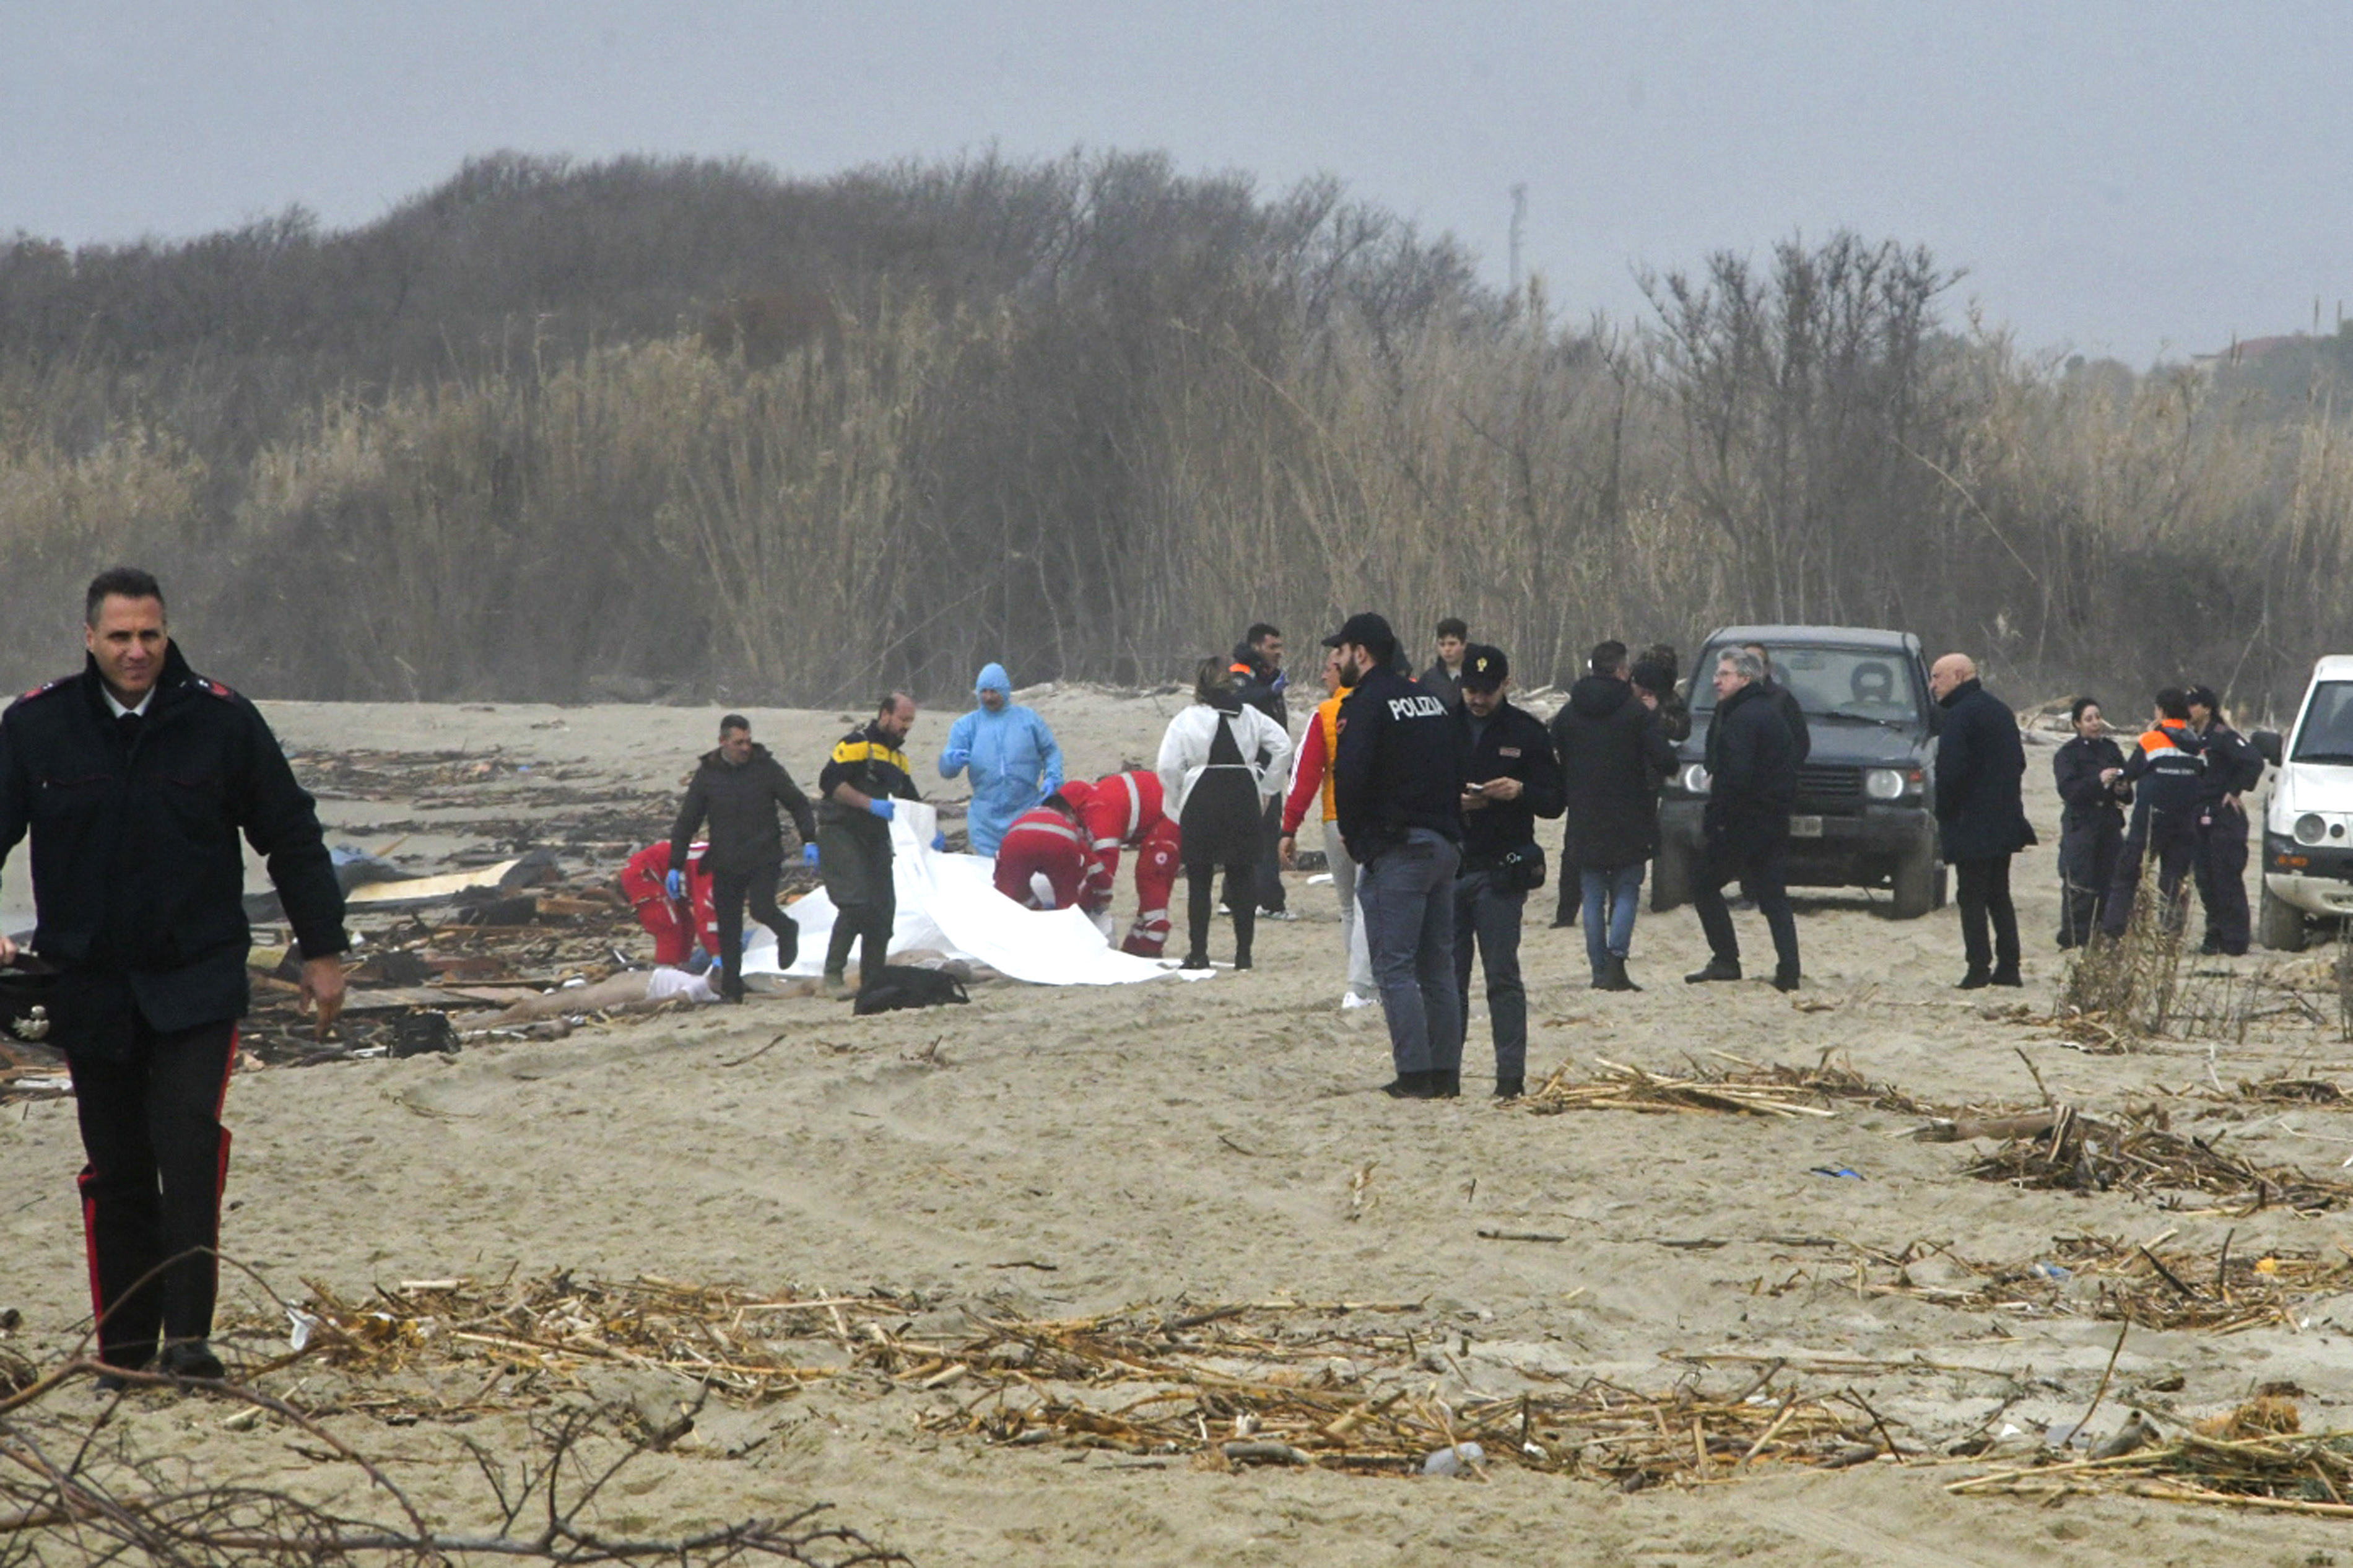 Rescuers recover a body after a migrant boat broke apart in rough seas, at a beach near Crotone. /Giuseppe Pipita/AP